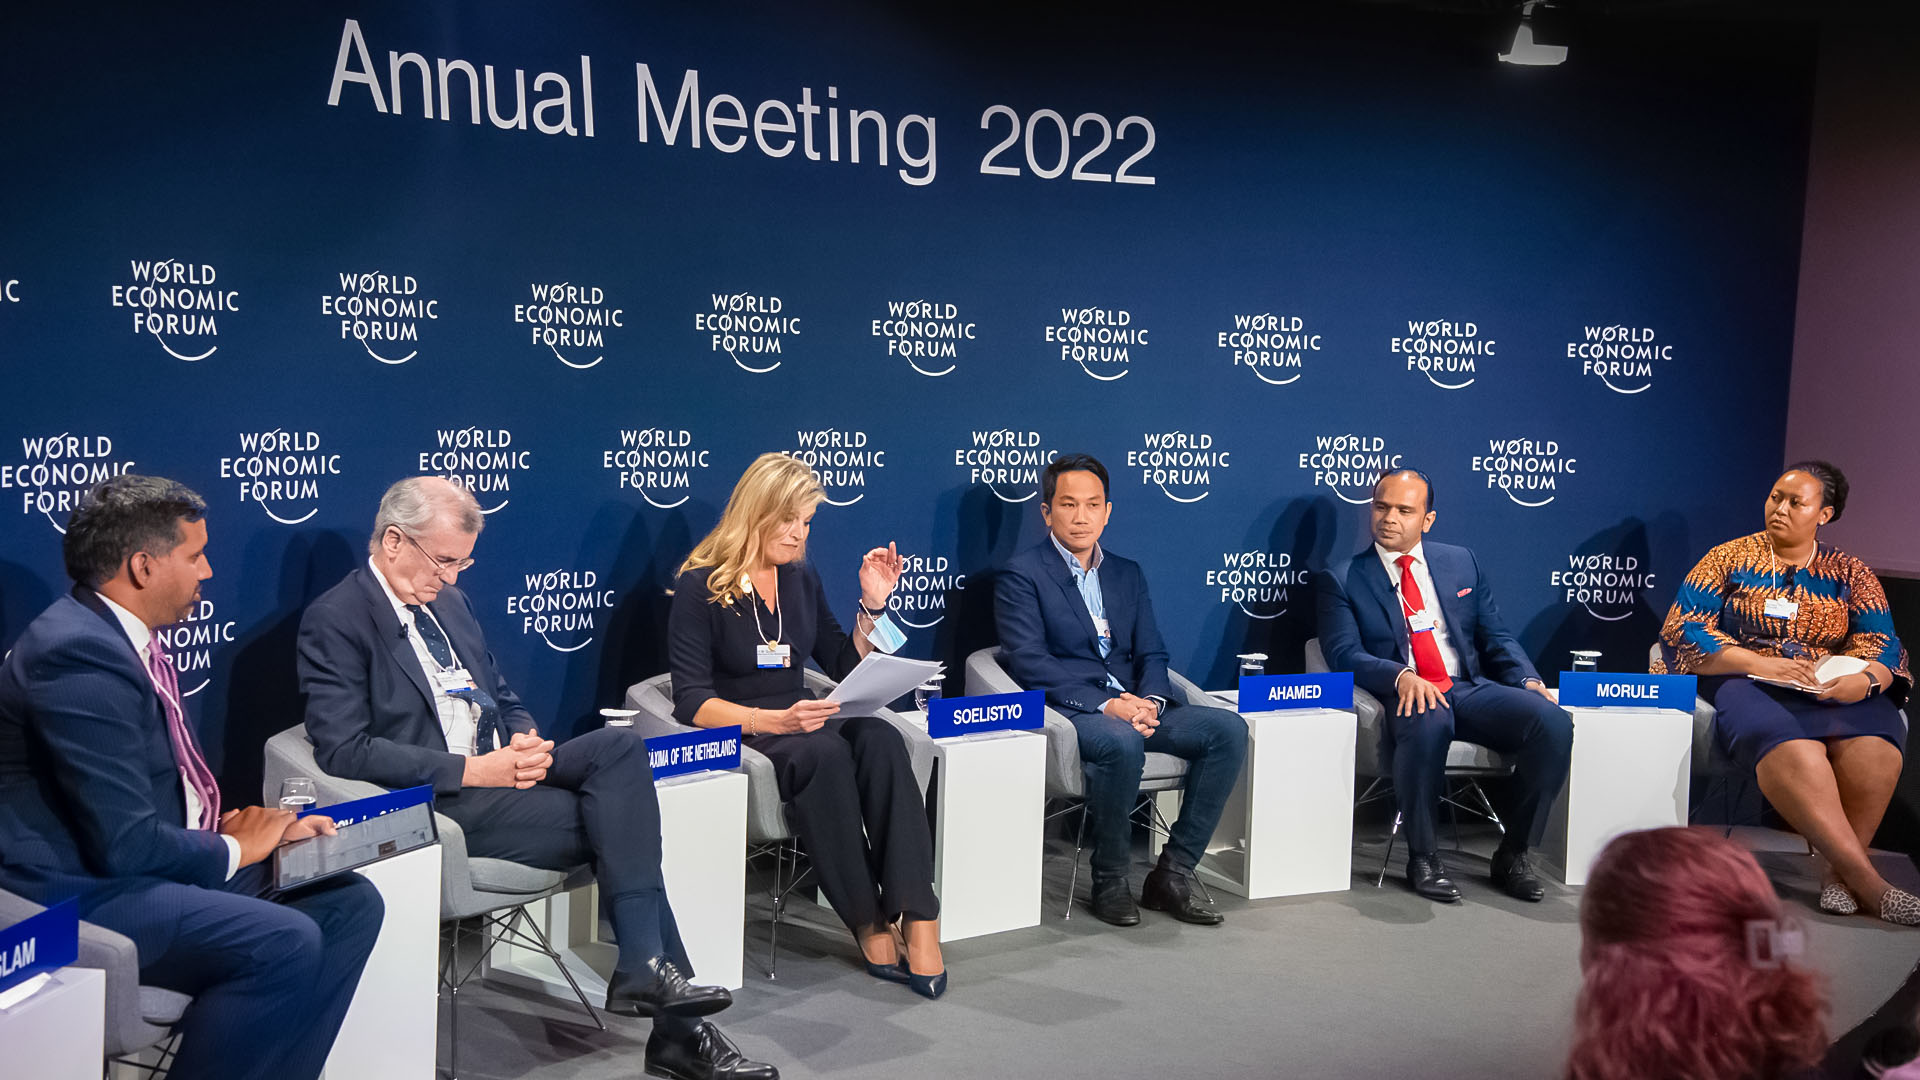 World Economic Forum session emphasizes financial literacy